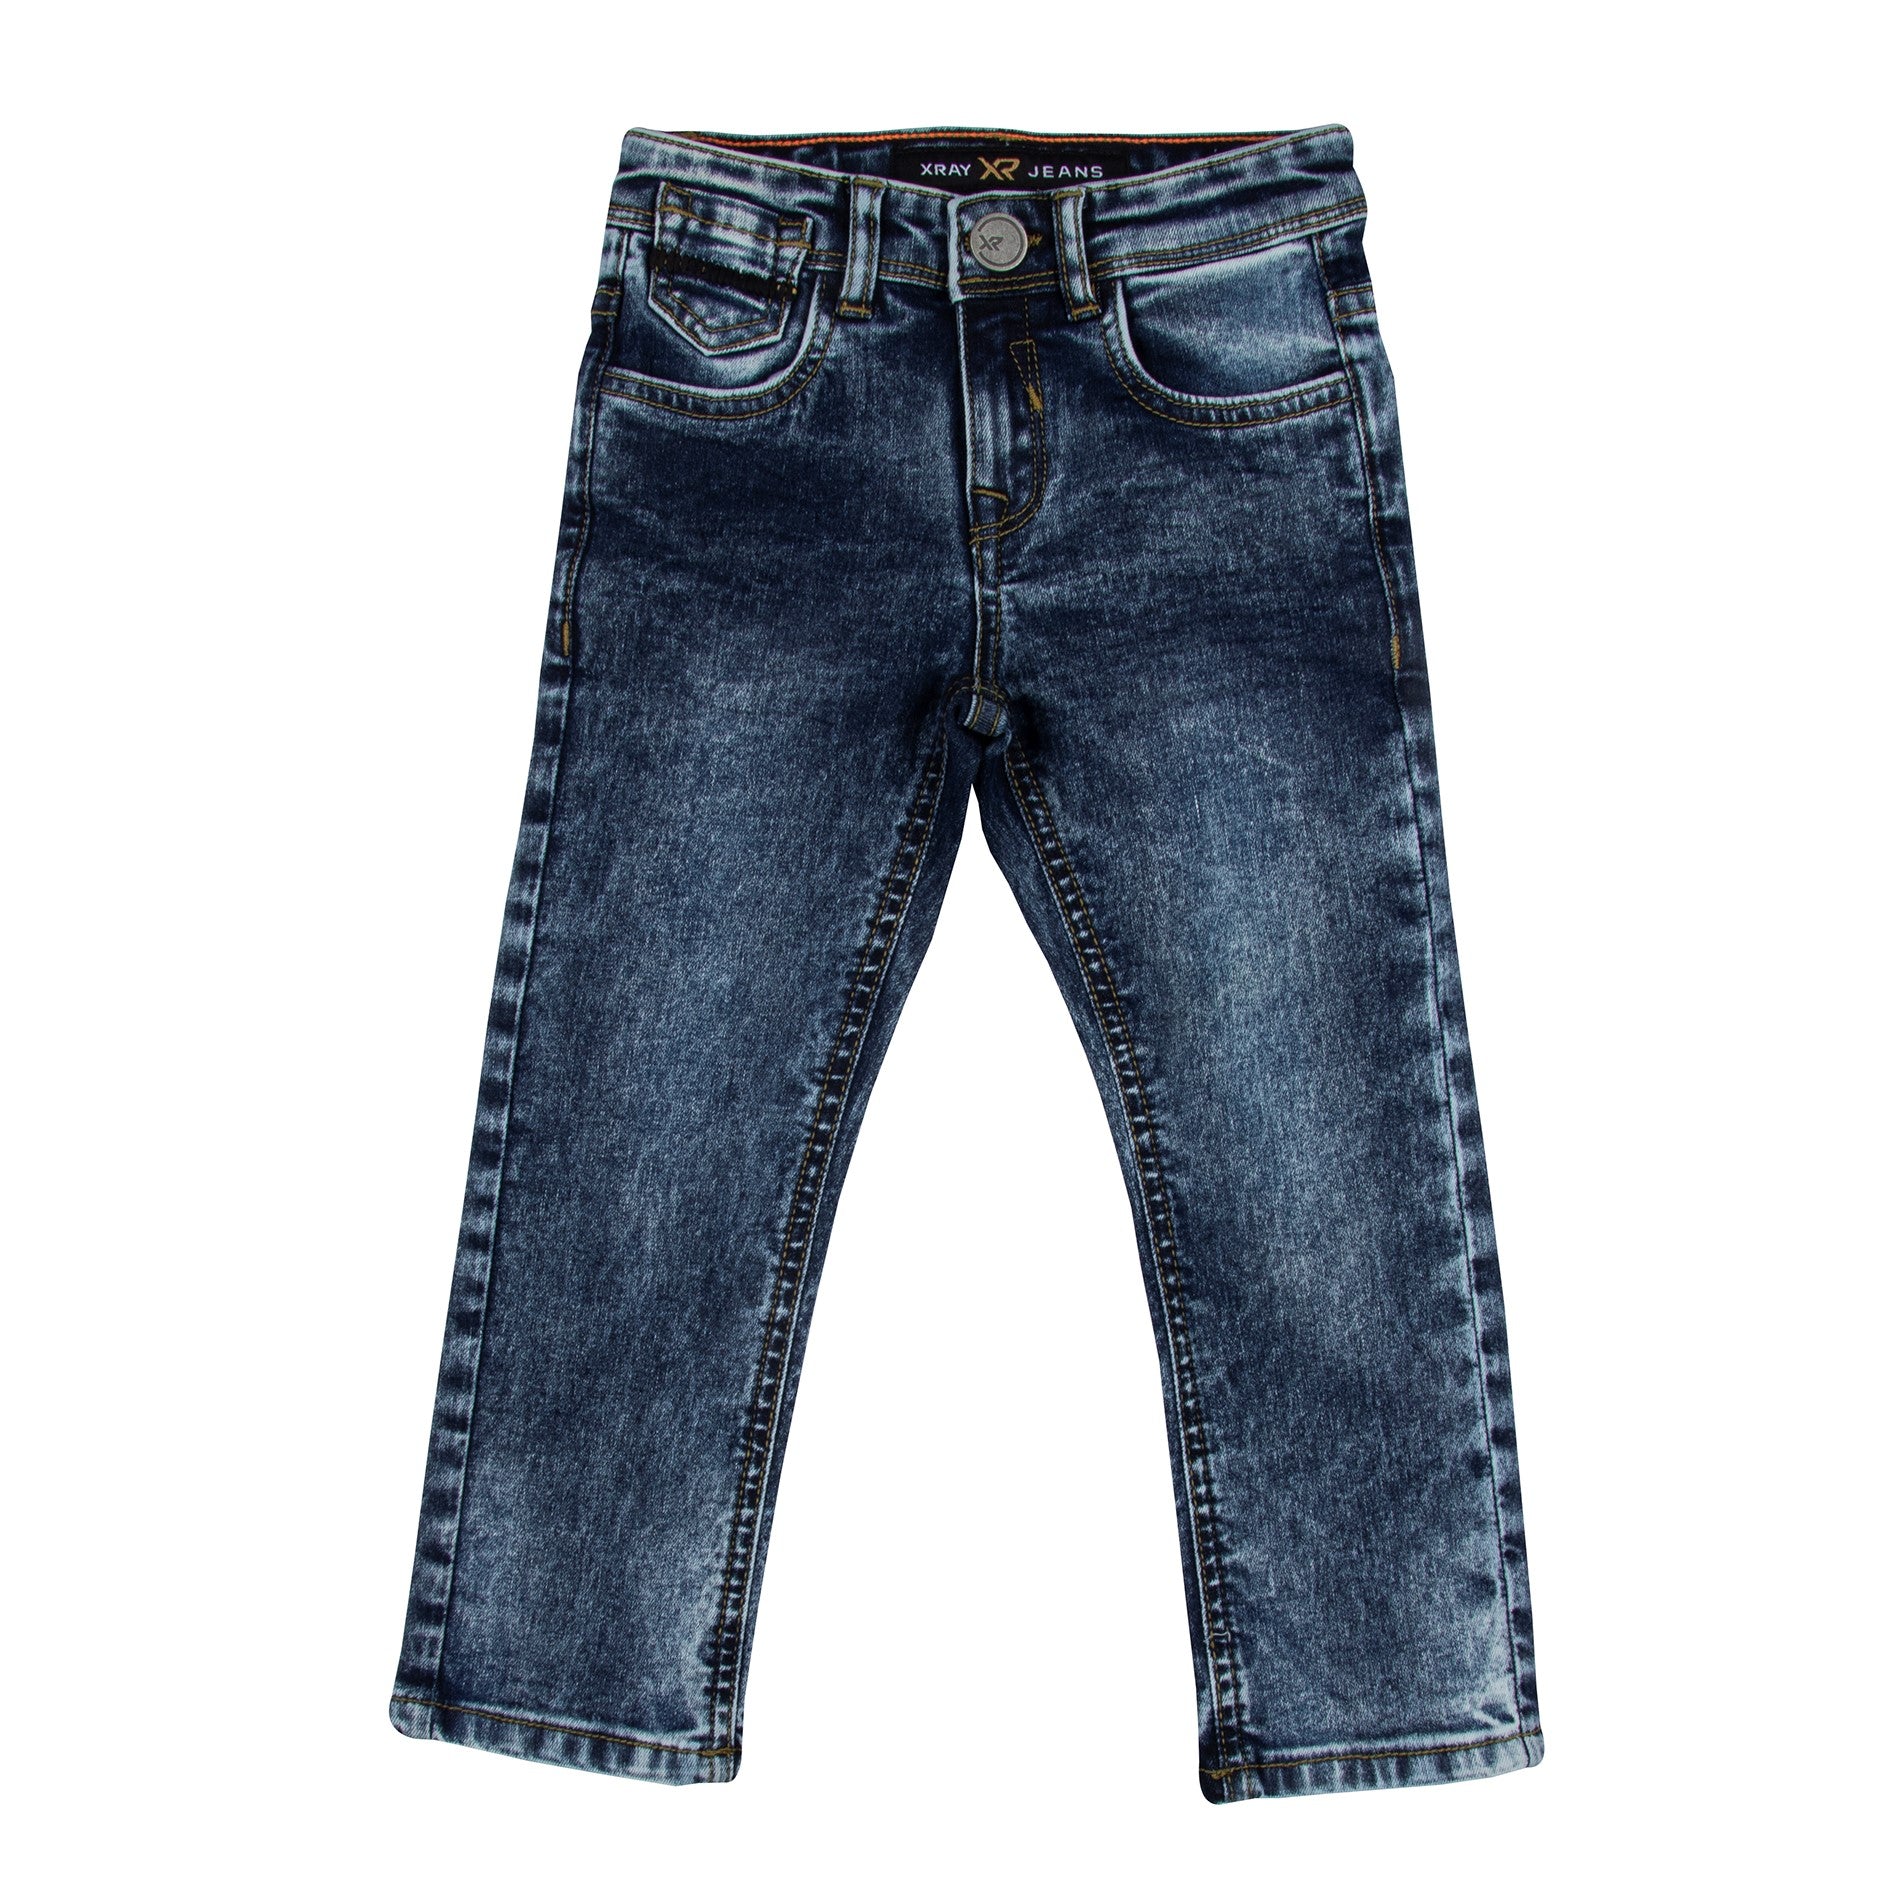 Latest Stylish Jeans Pants For Kids 2020-2021/ Boys Jeans Design Ideas/Kids  Denim Jeans - YouTube | Stylish jeans for men, Denim jeans fashion, Kids  denim jeans